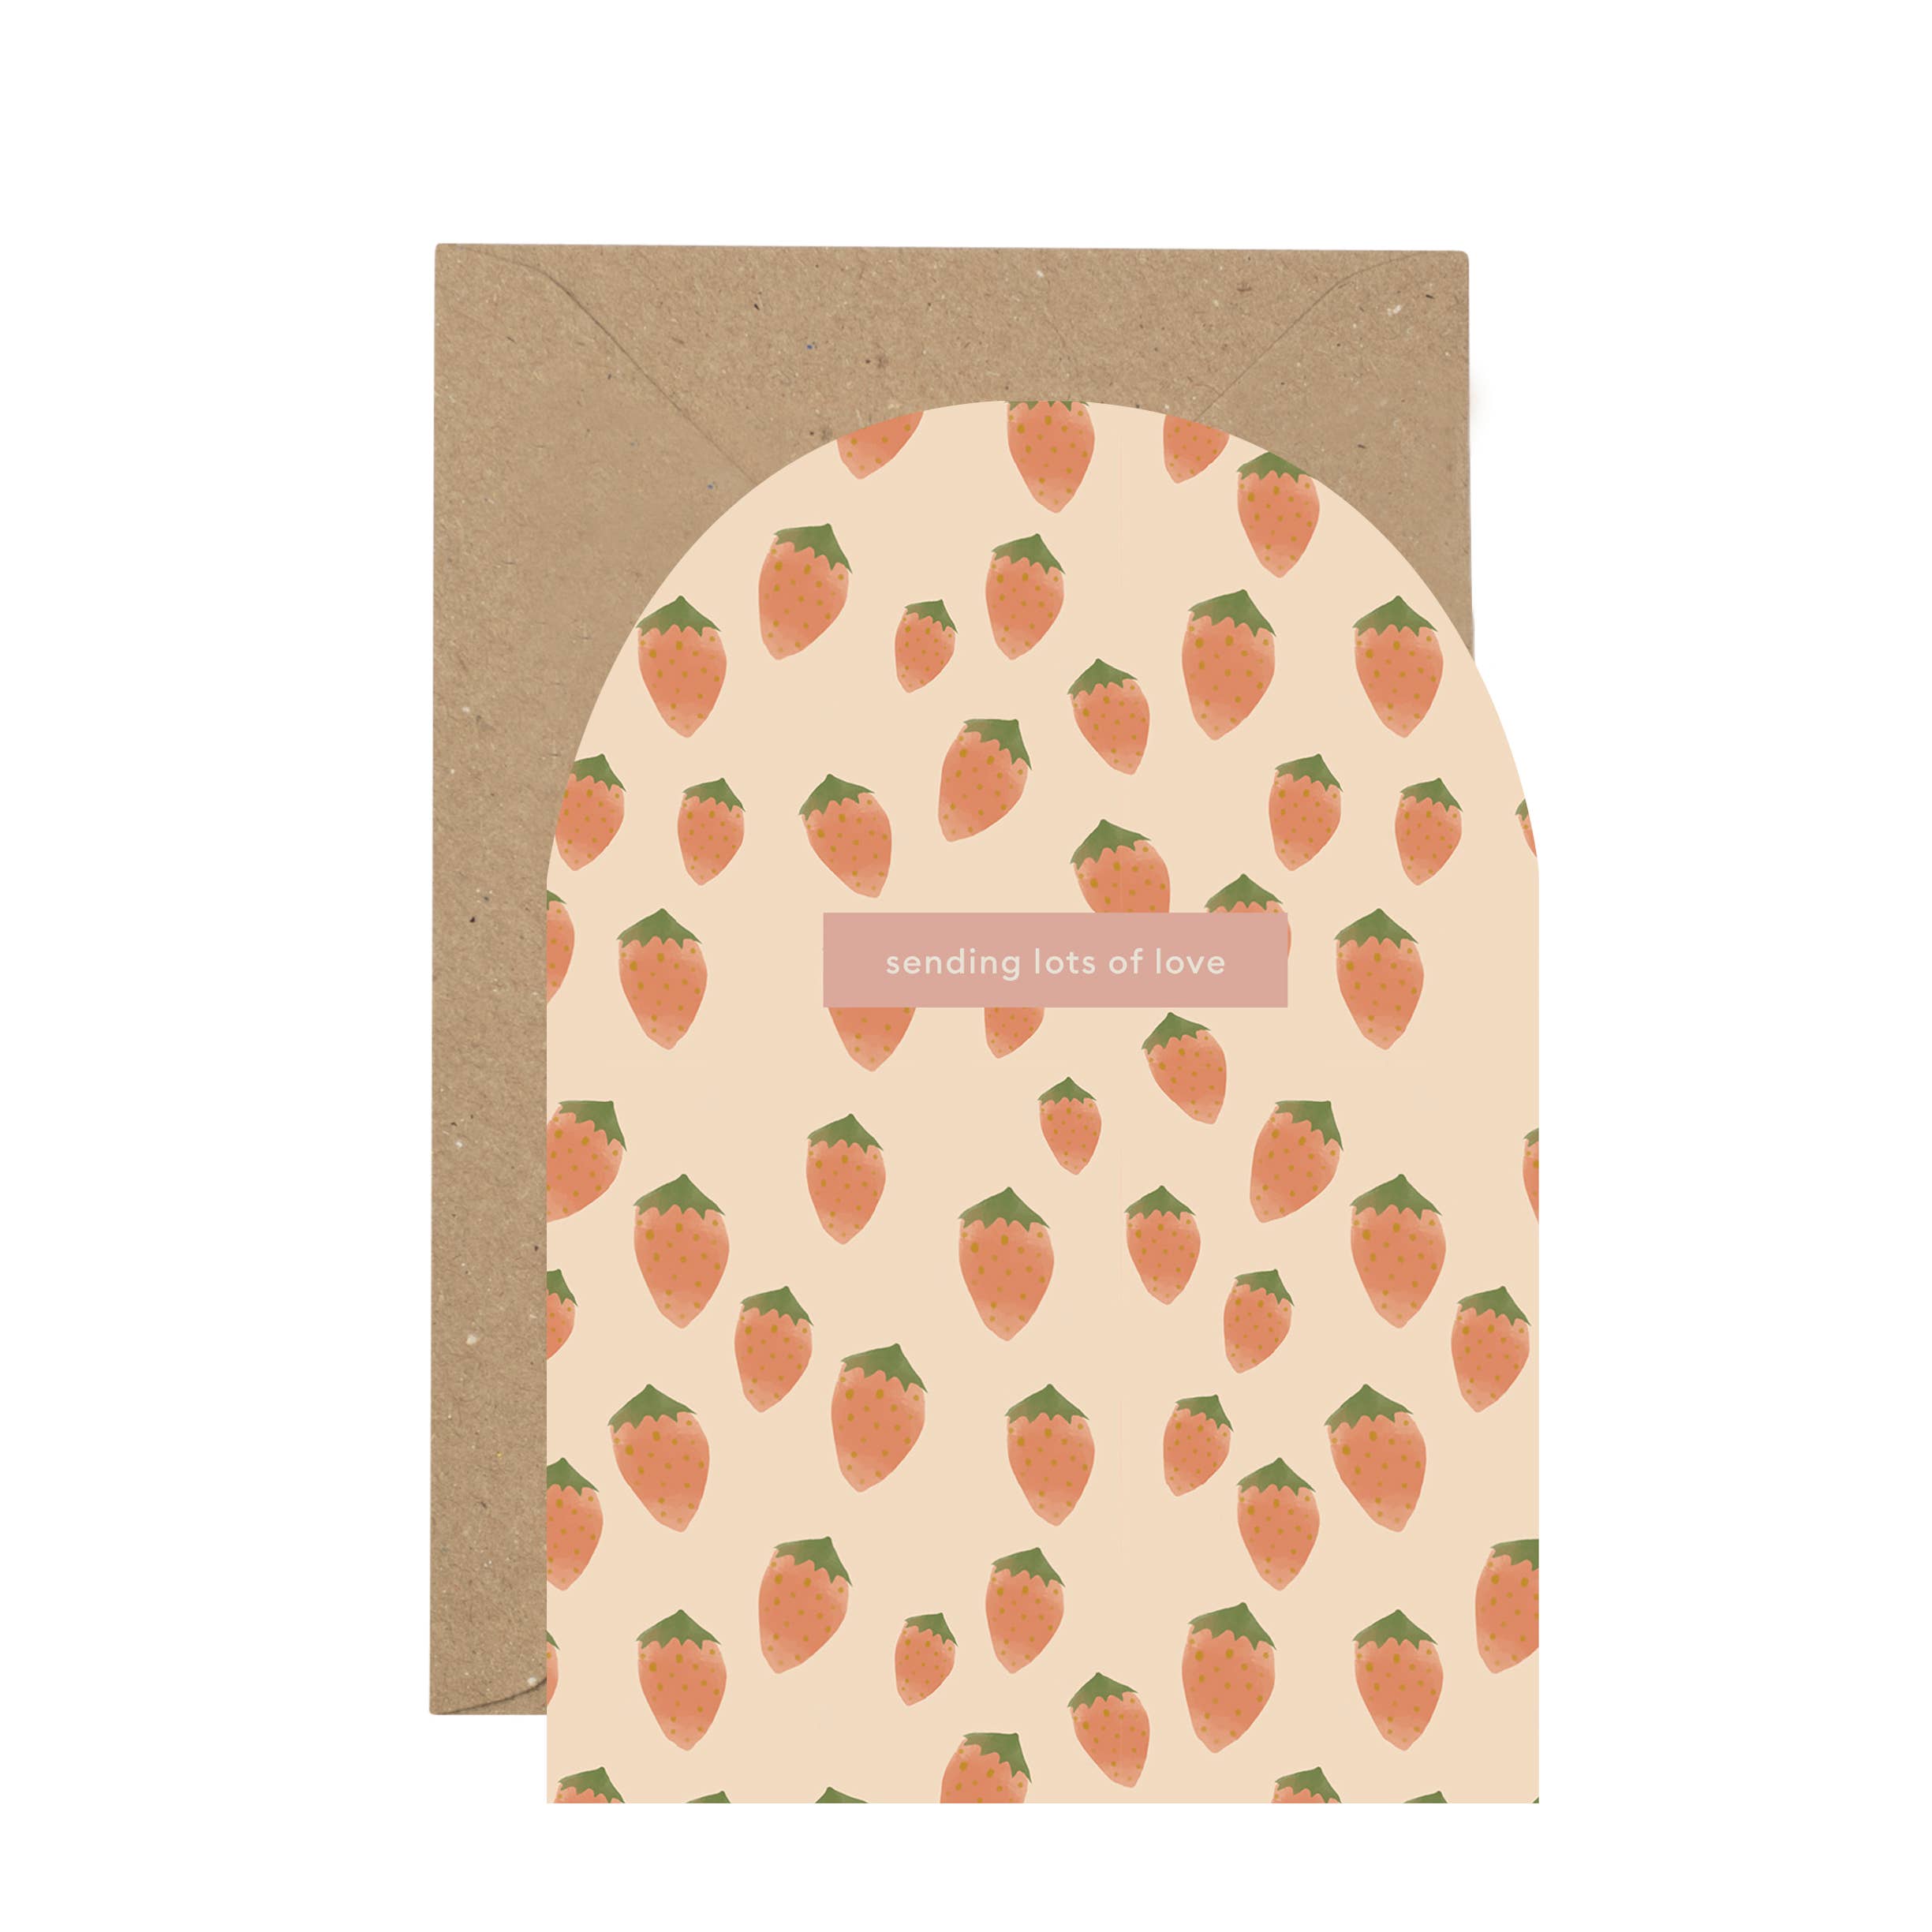 'Sending lots of love' strawberry card